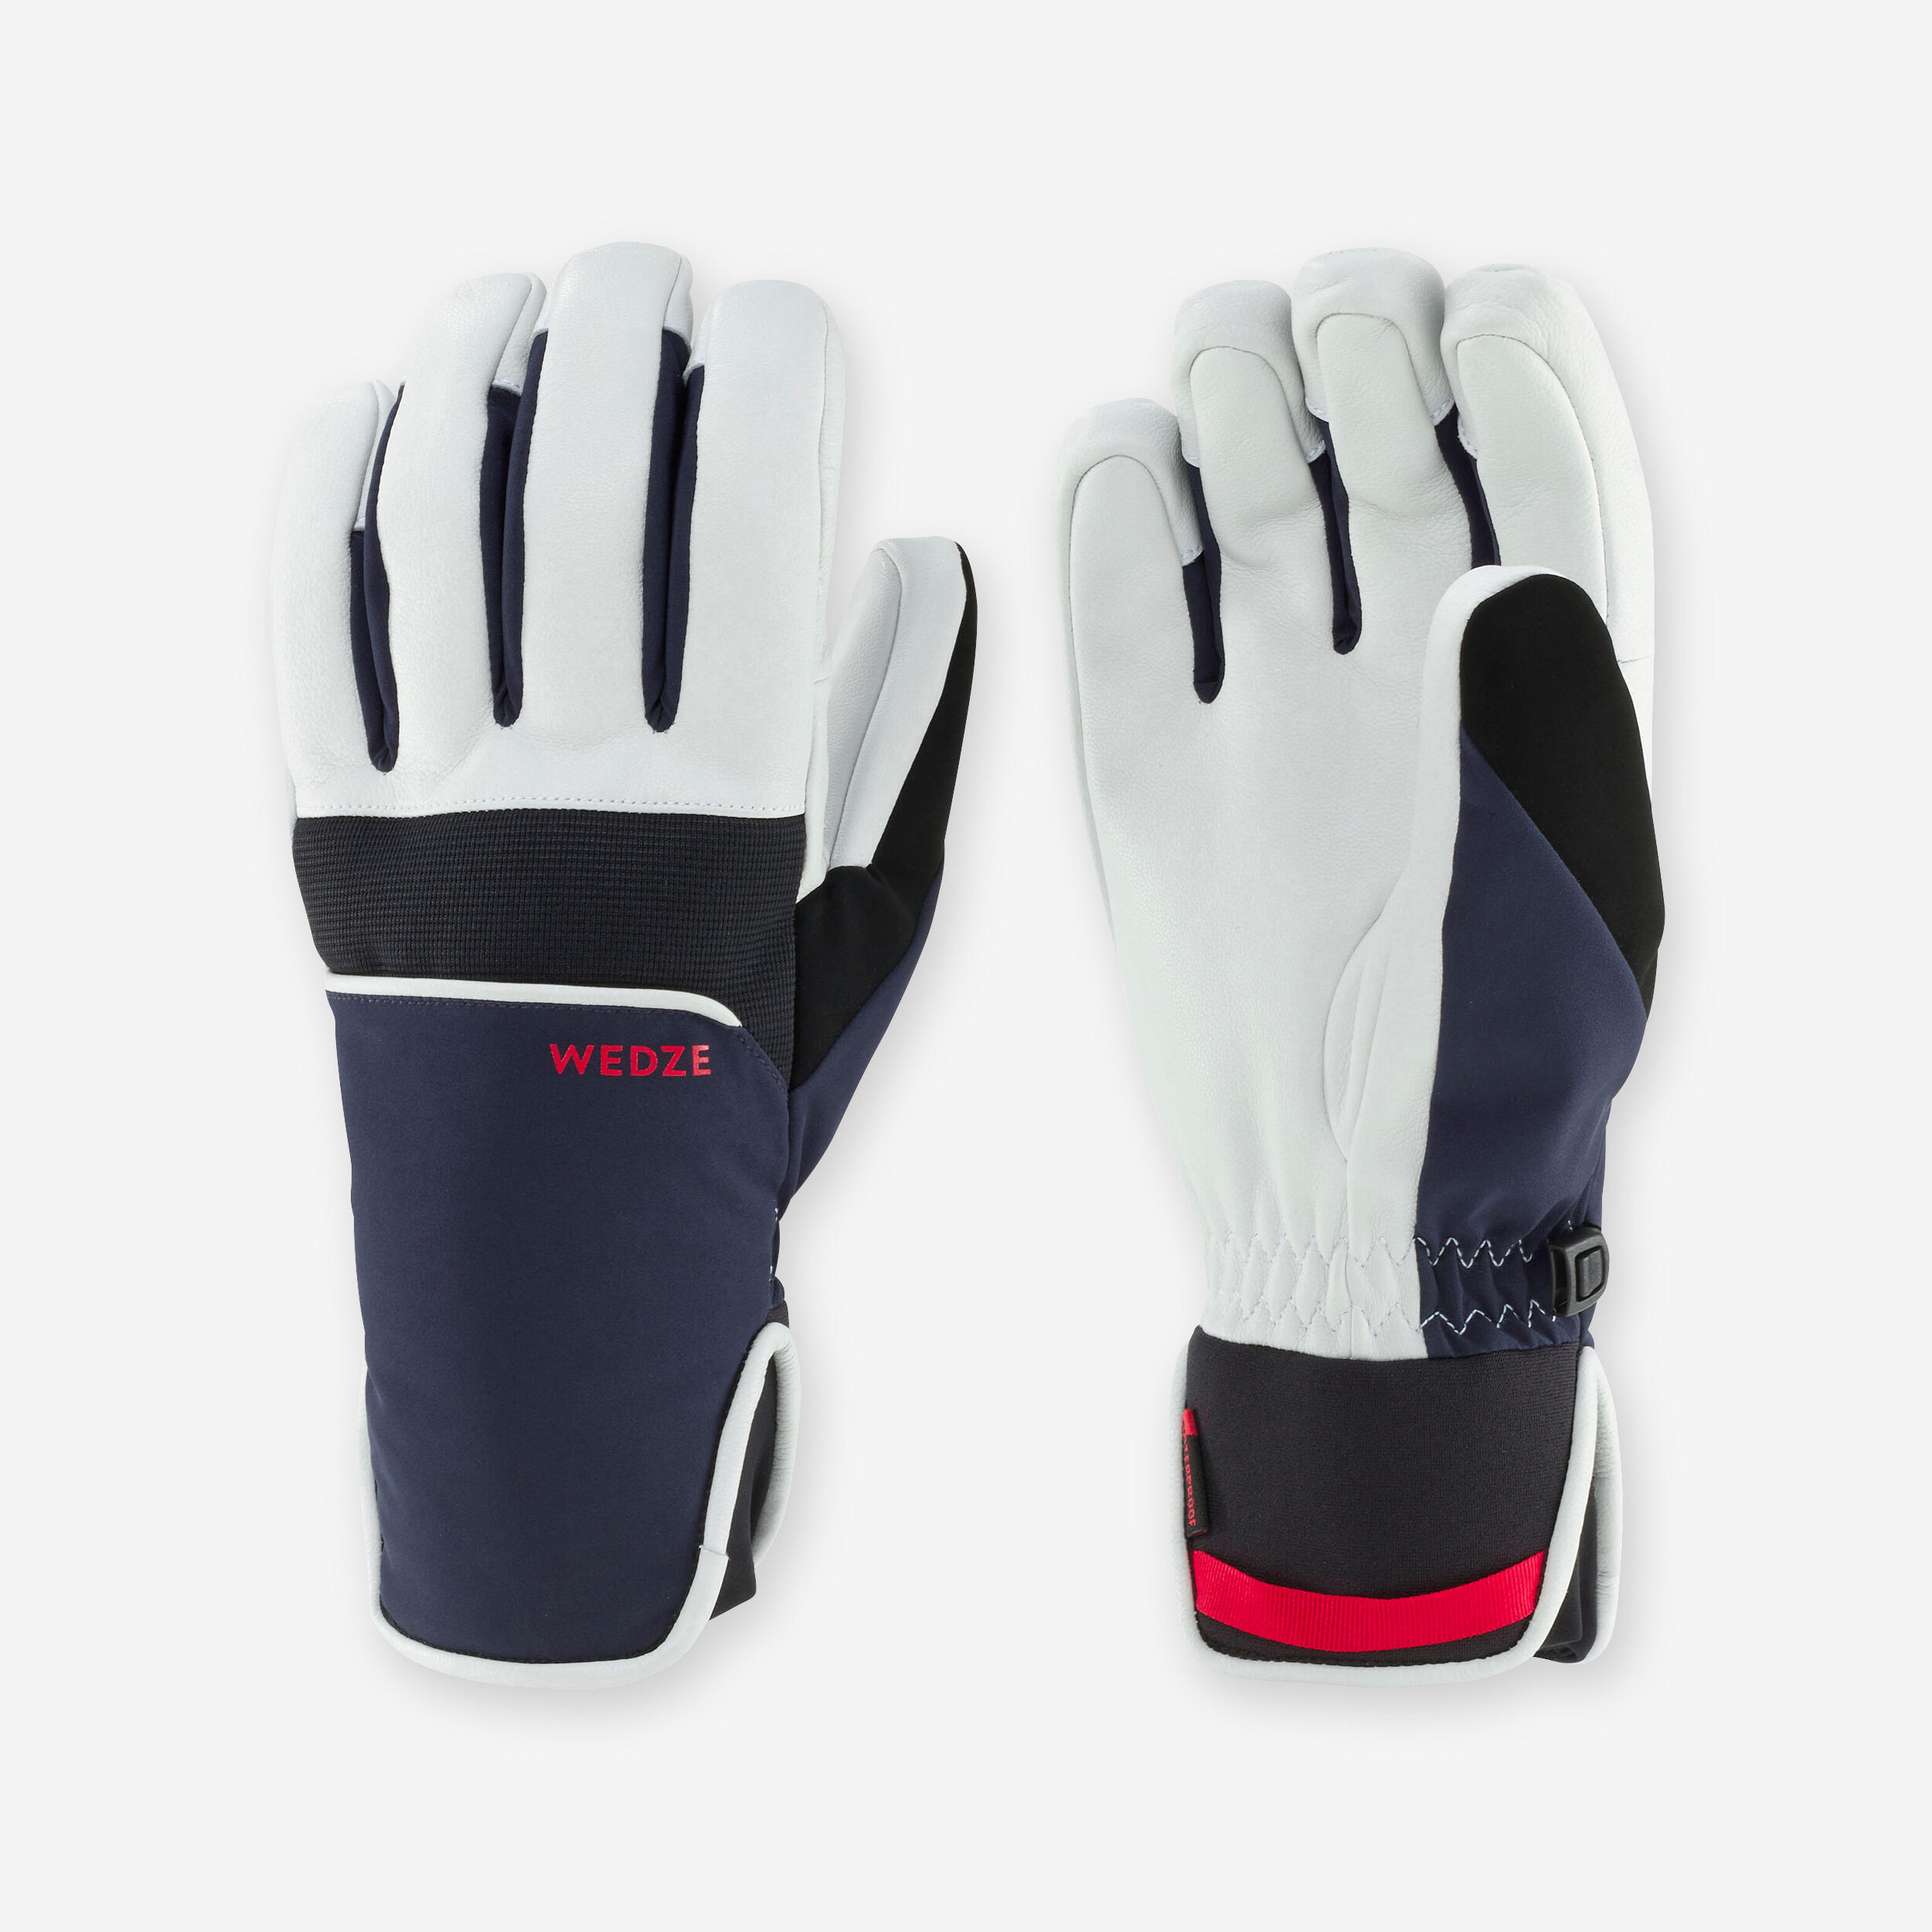 WEDZE Adult ski gloves 550 - navy blue and white